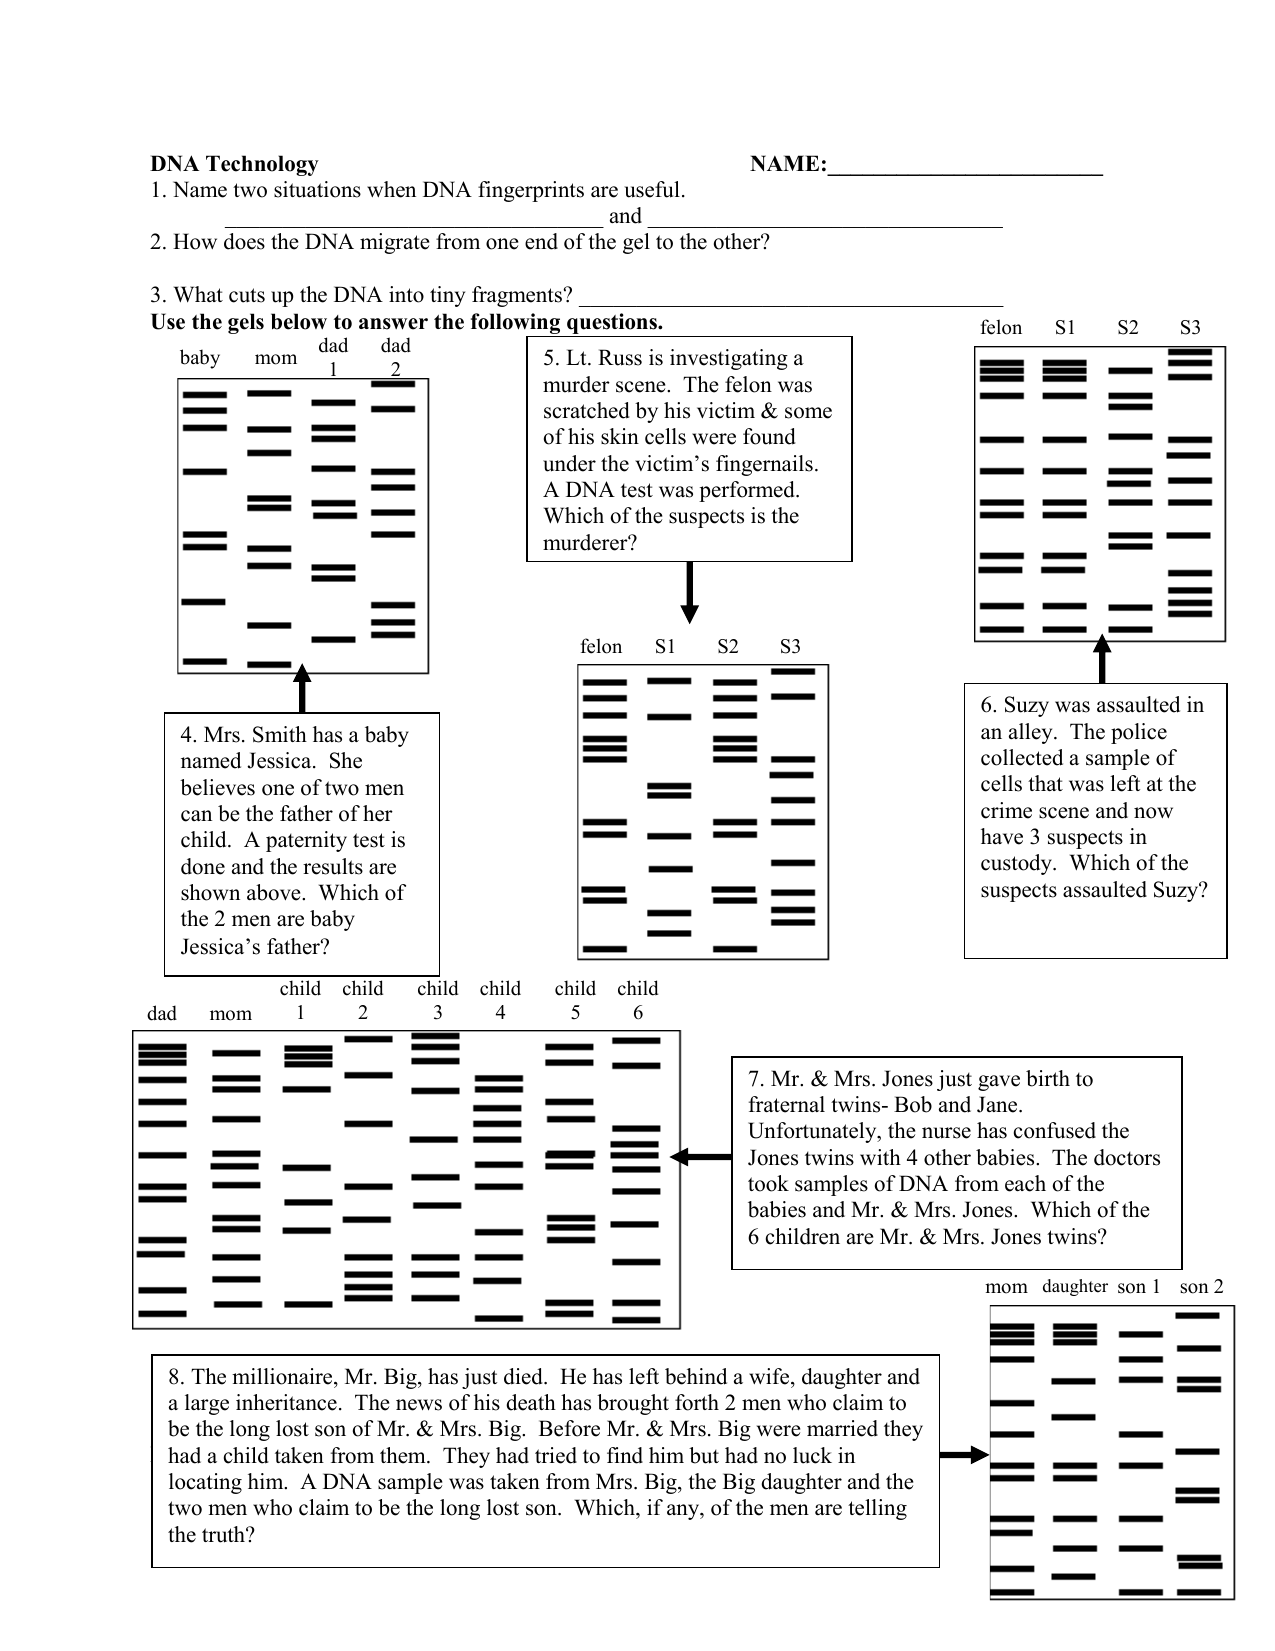 DNA Technology Worksheet Throughout Gel Electrophoresis Worksheet Answers